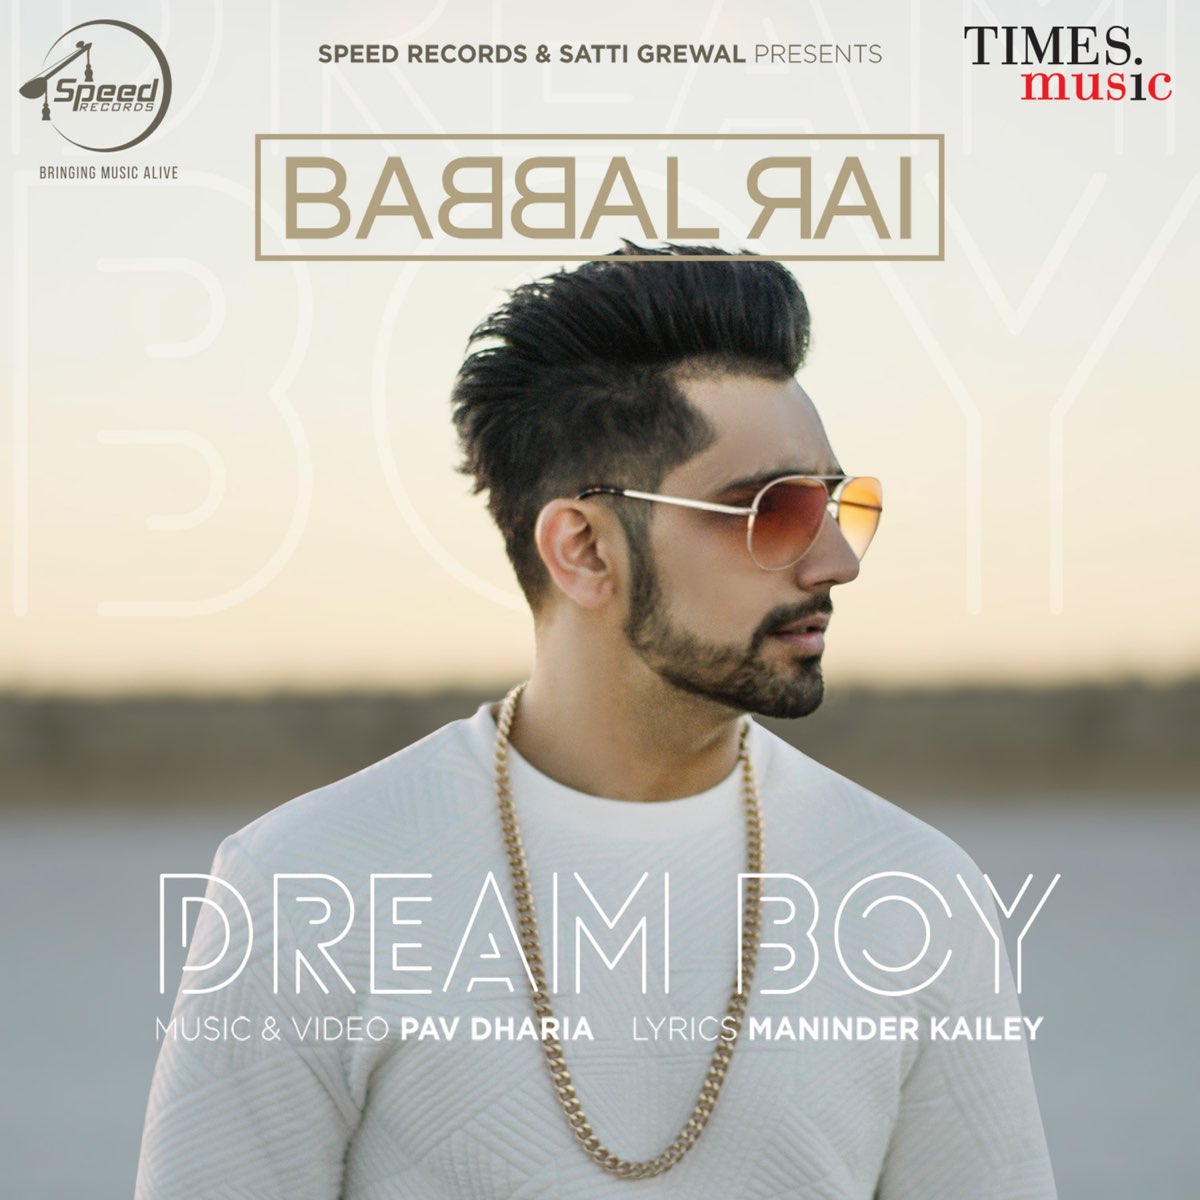 Babbal rai dream boy